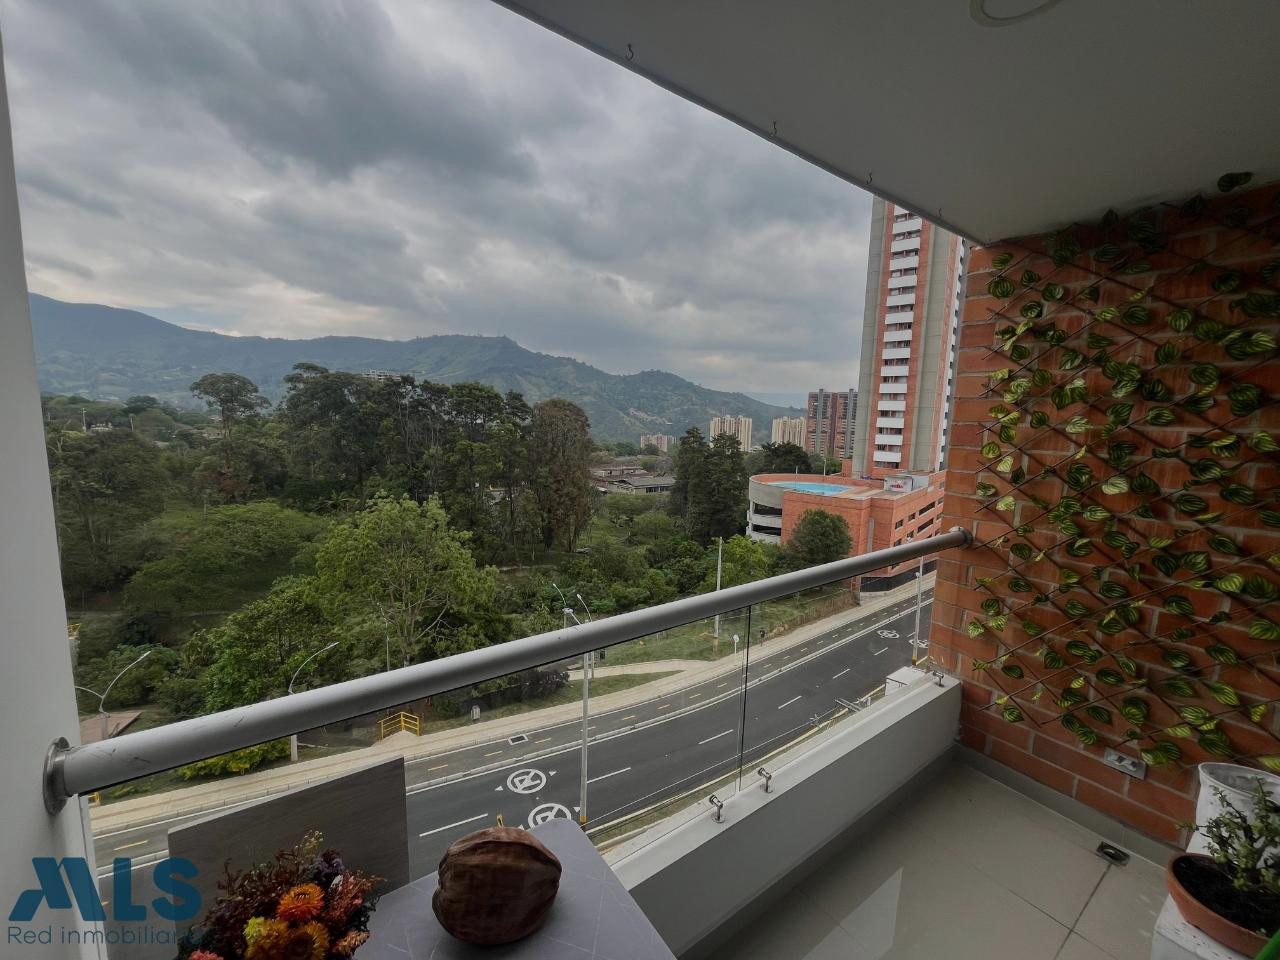 Apartamento en sector de alta valorizacion itagui - suramerica